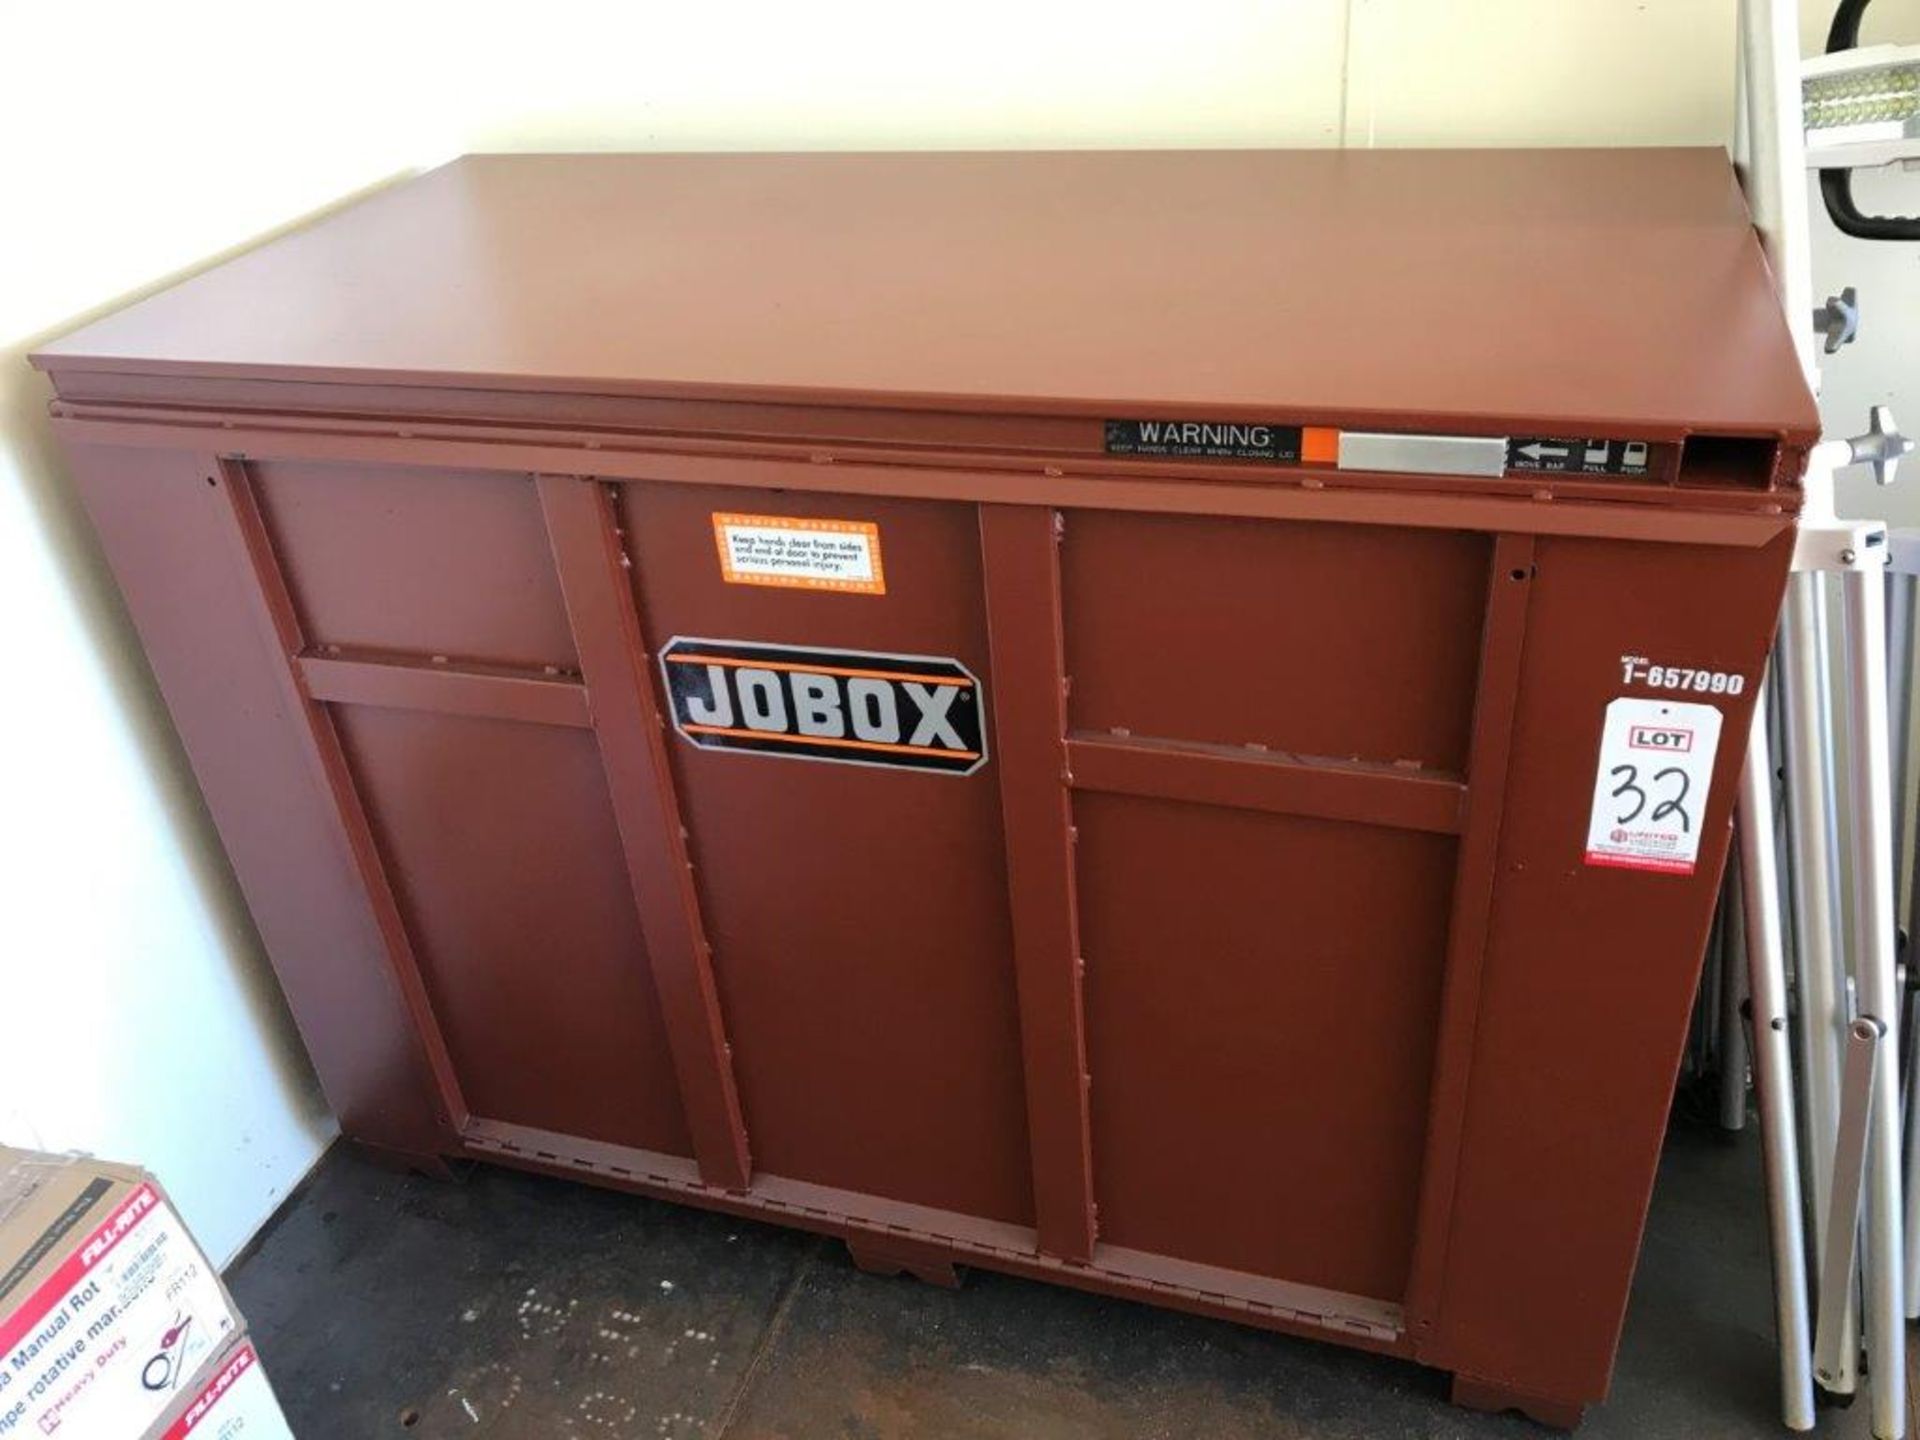 JOBOX, MODEL 1-657990, 60" X 30" X 42" DEEP, W/ CONTENTS: PPE, PLASTIC GAS CONTAINERS, ETC. (